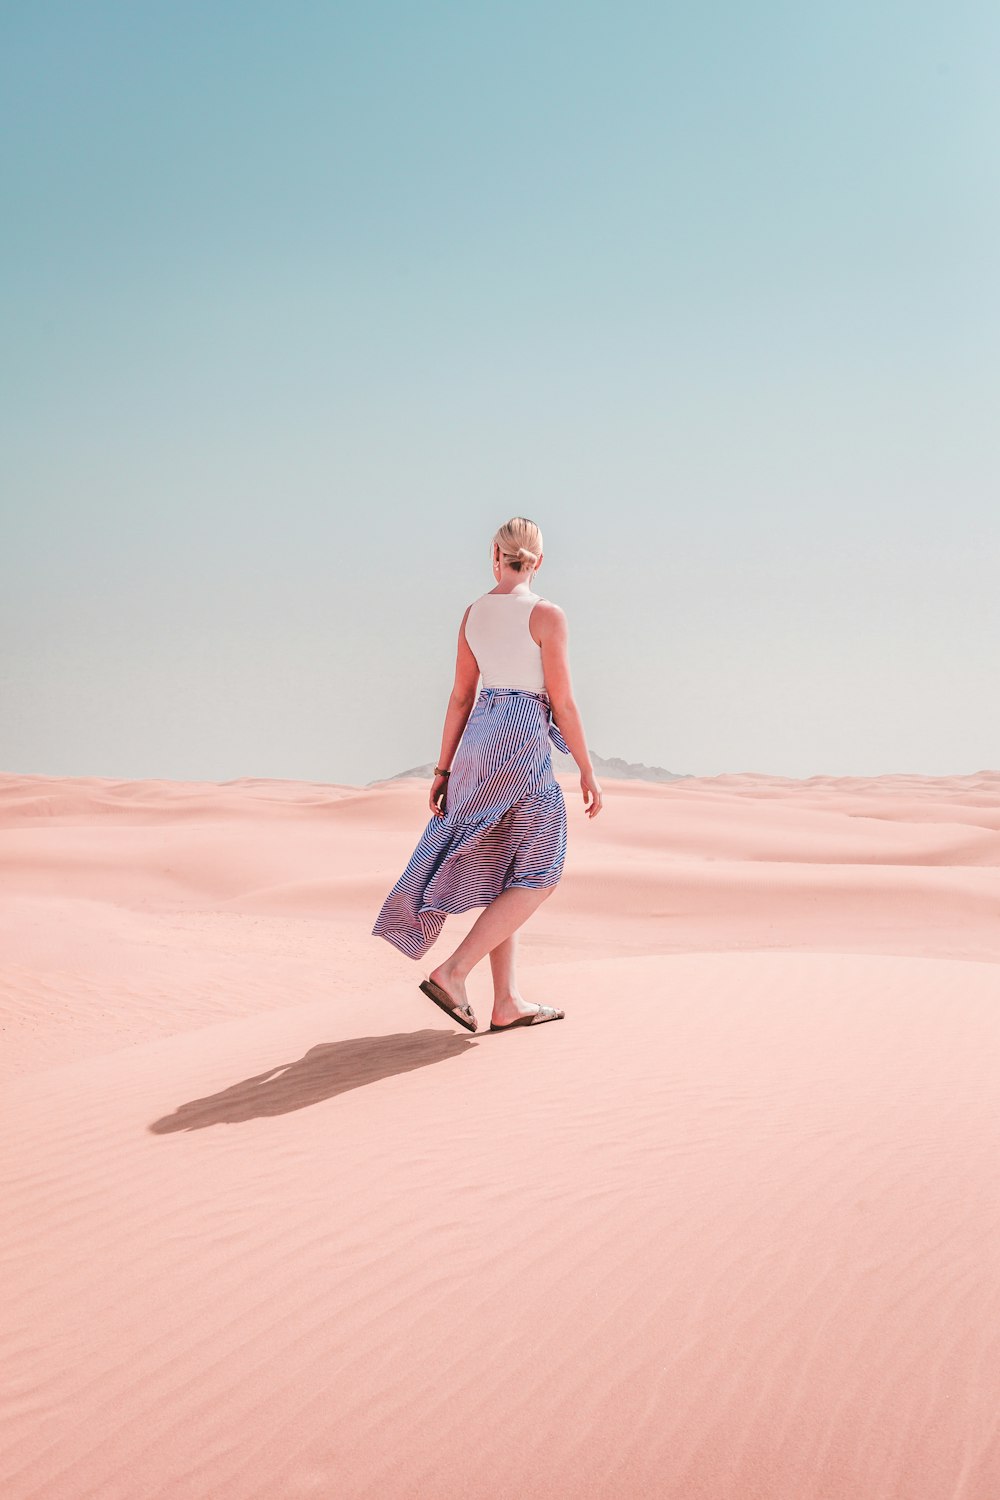 woman wears dress walks on the desert during daytime